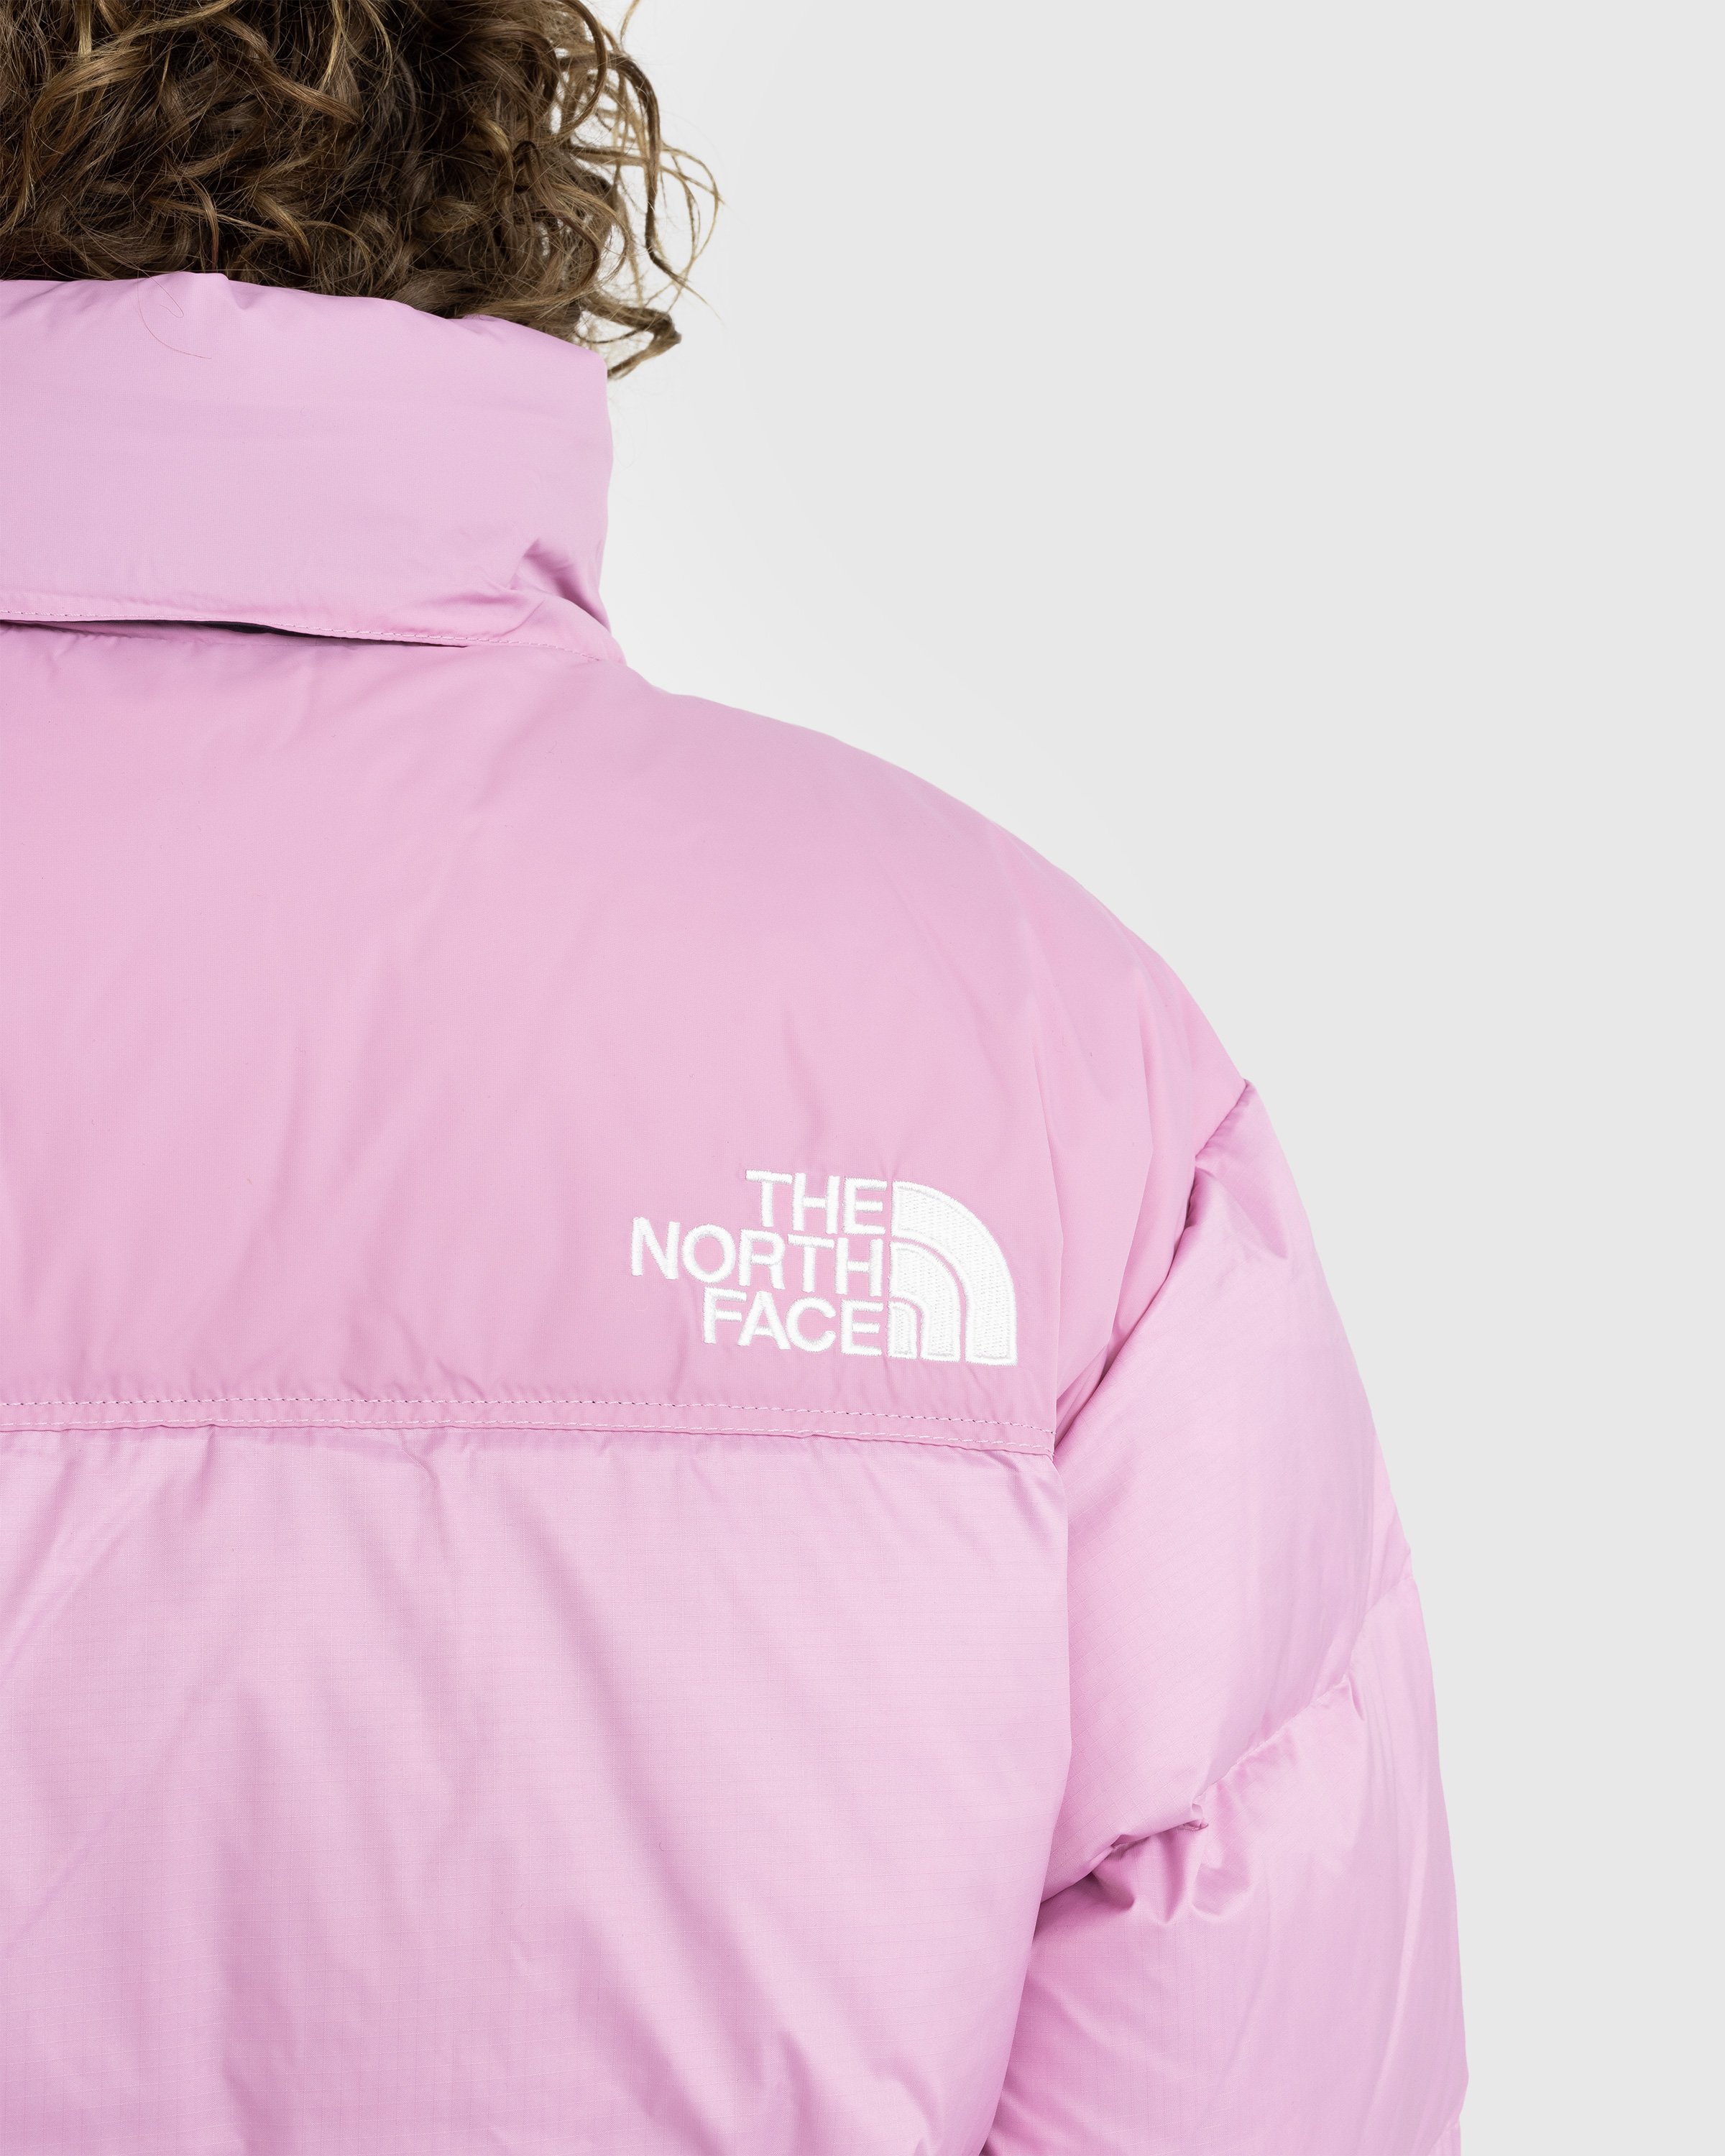 The North Face - 1996 Retro Nuptse Jacket Pink - Clothing - Pink - Image 5